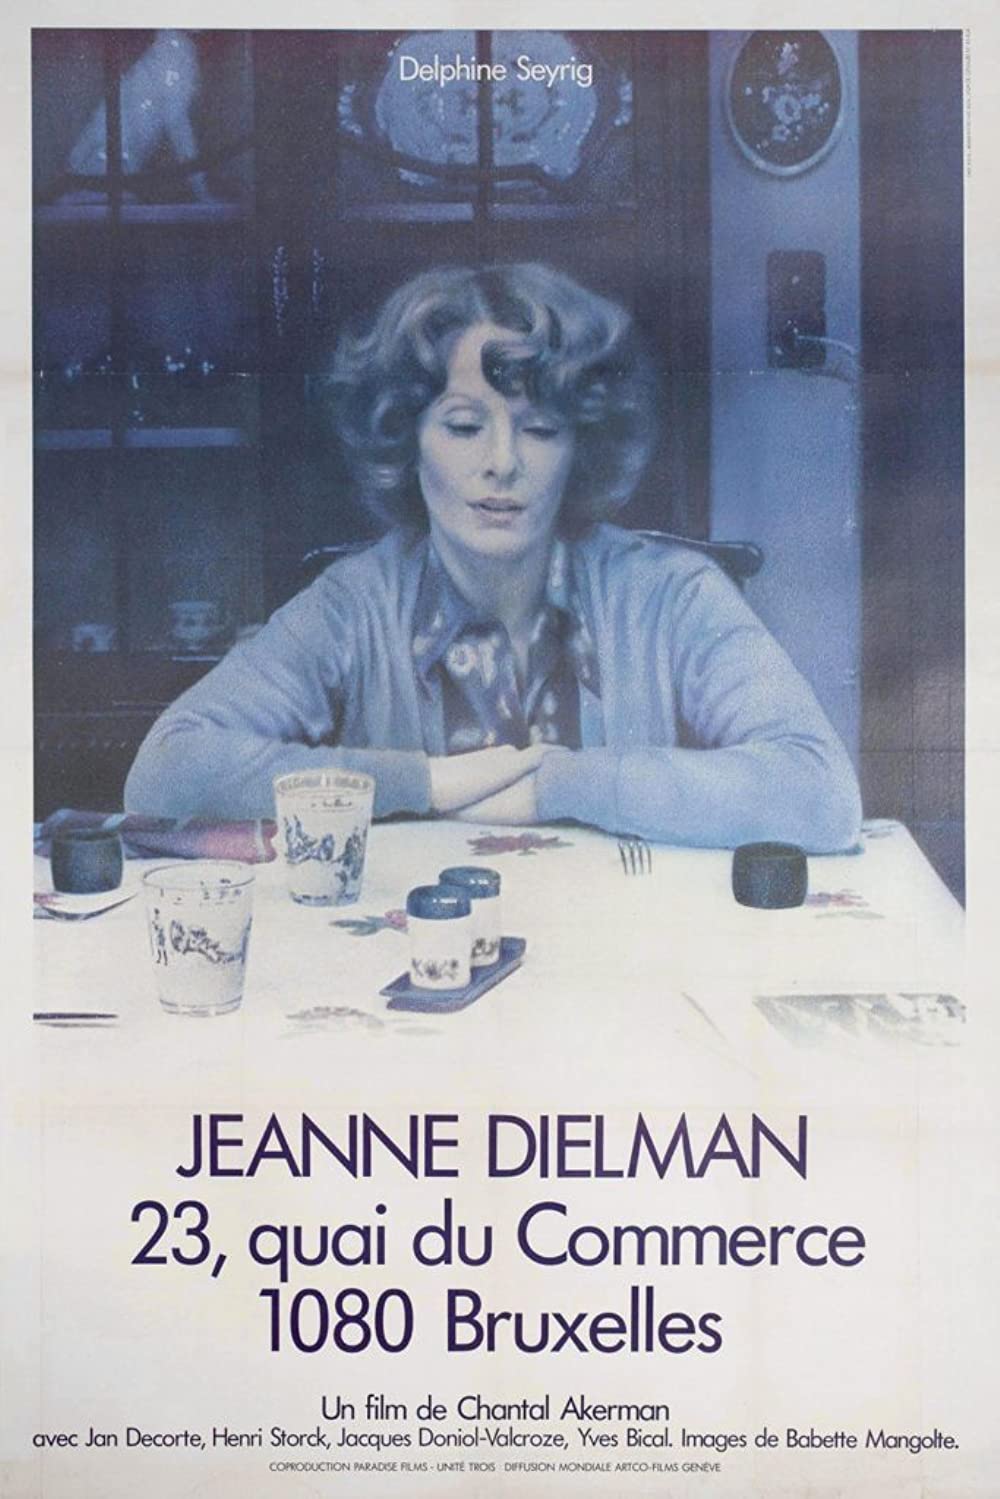 Film poster for Chantal Akerman